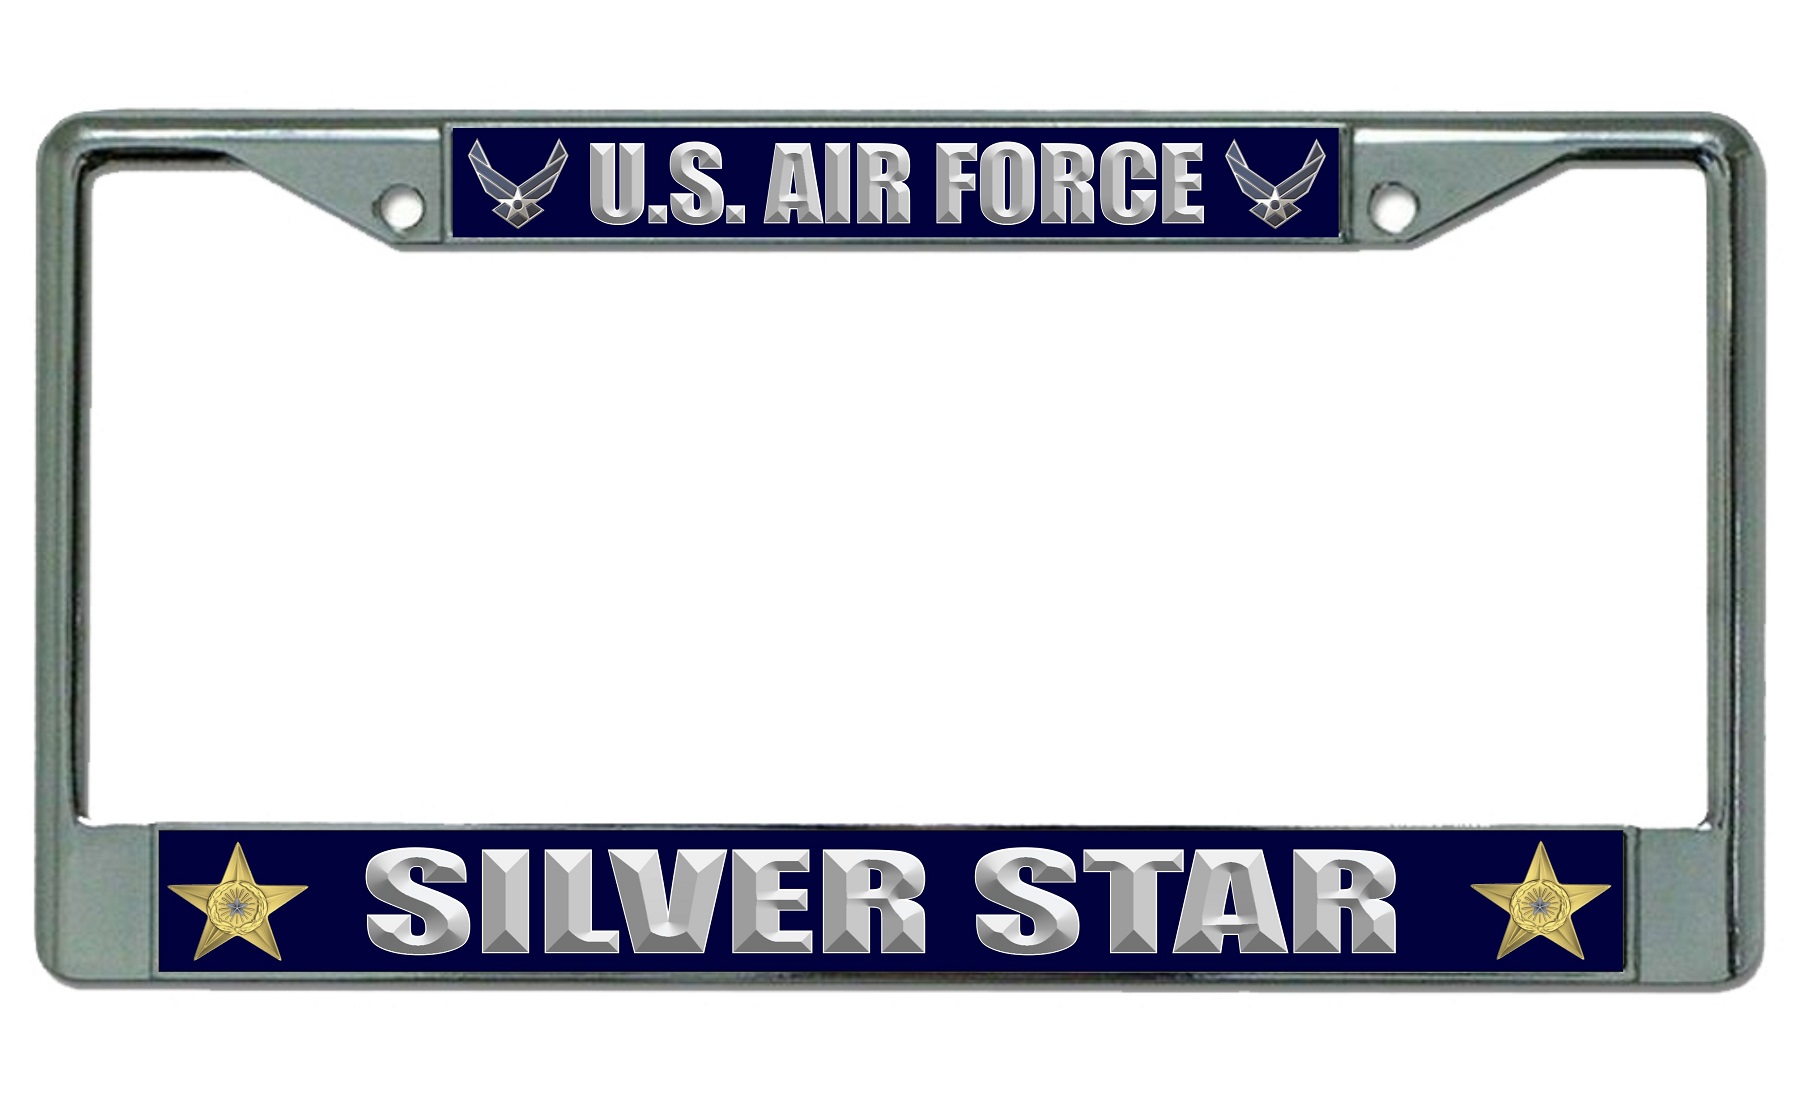 U.S. Air Force Silver Star Chrome License Plate FRAME